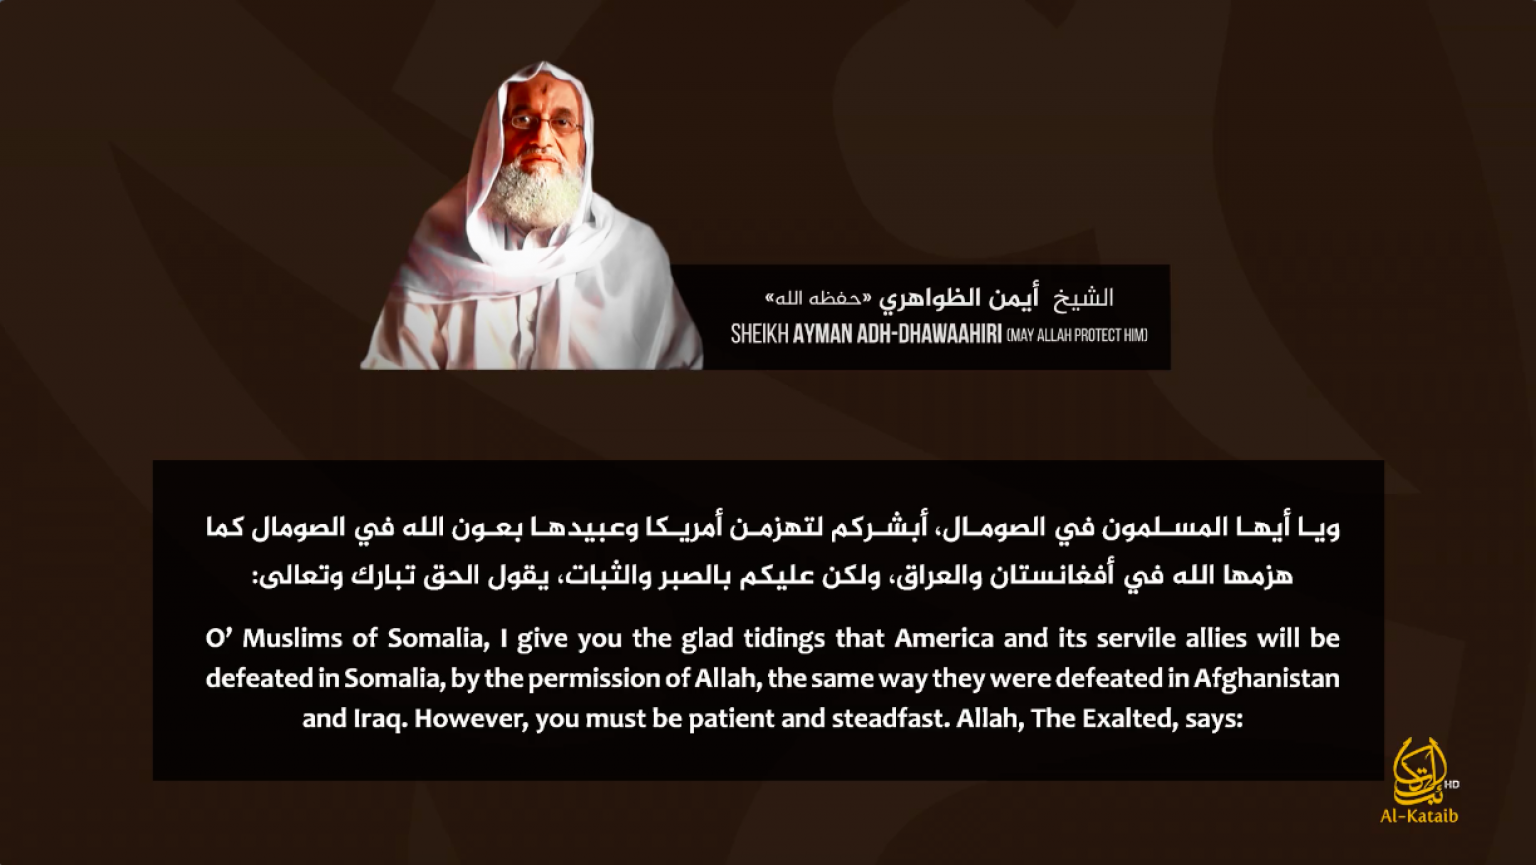 20-01-08-Ayman-al-Zawahiri-in-Shabaab-vi